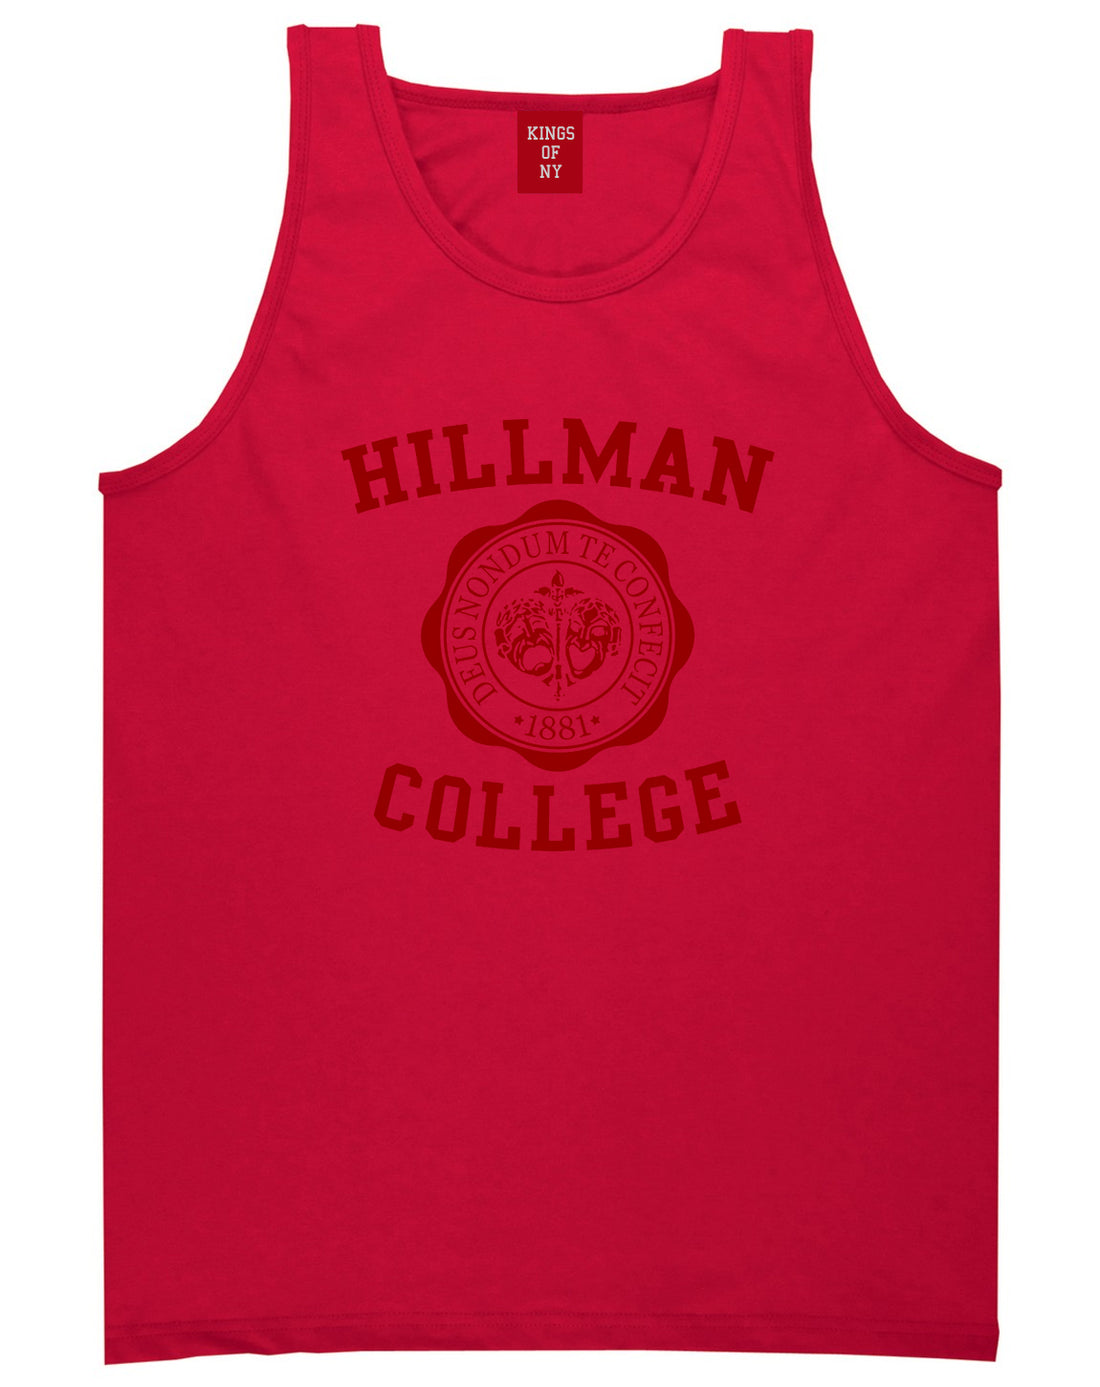 Hillman College Mens Tank Top Shirt Red